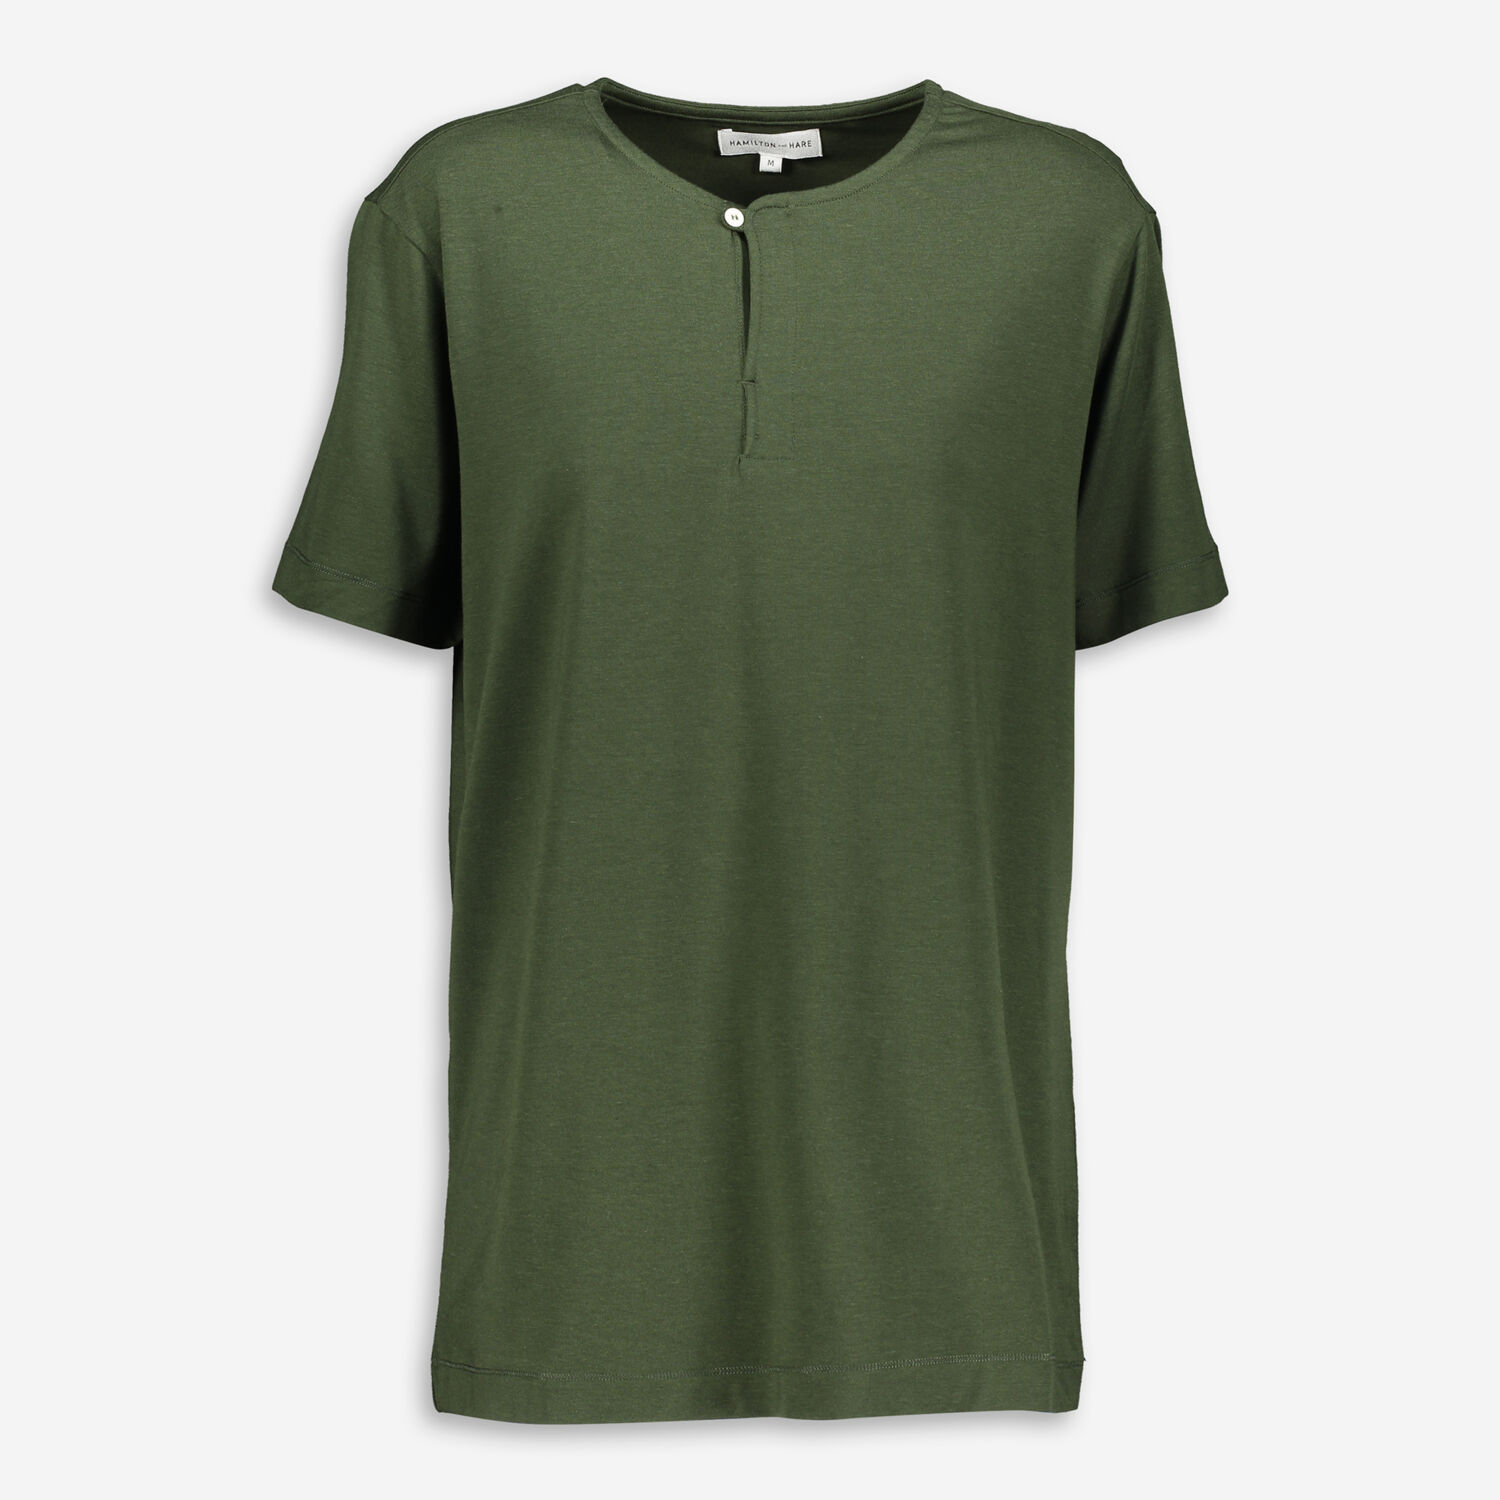 Olive Green Lounge T Shirt - TK Maxx UK